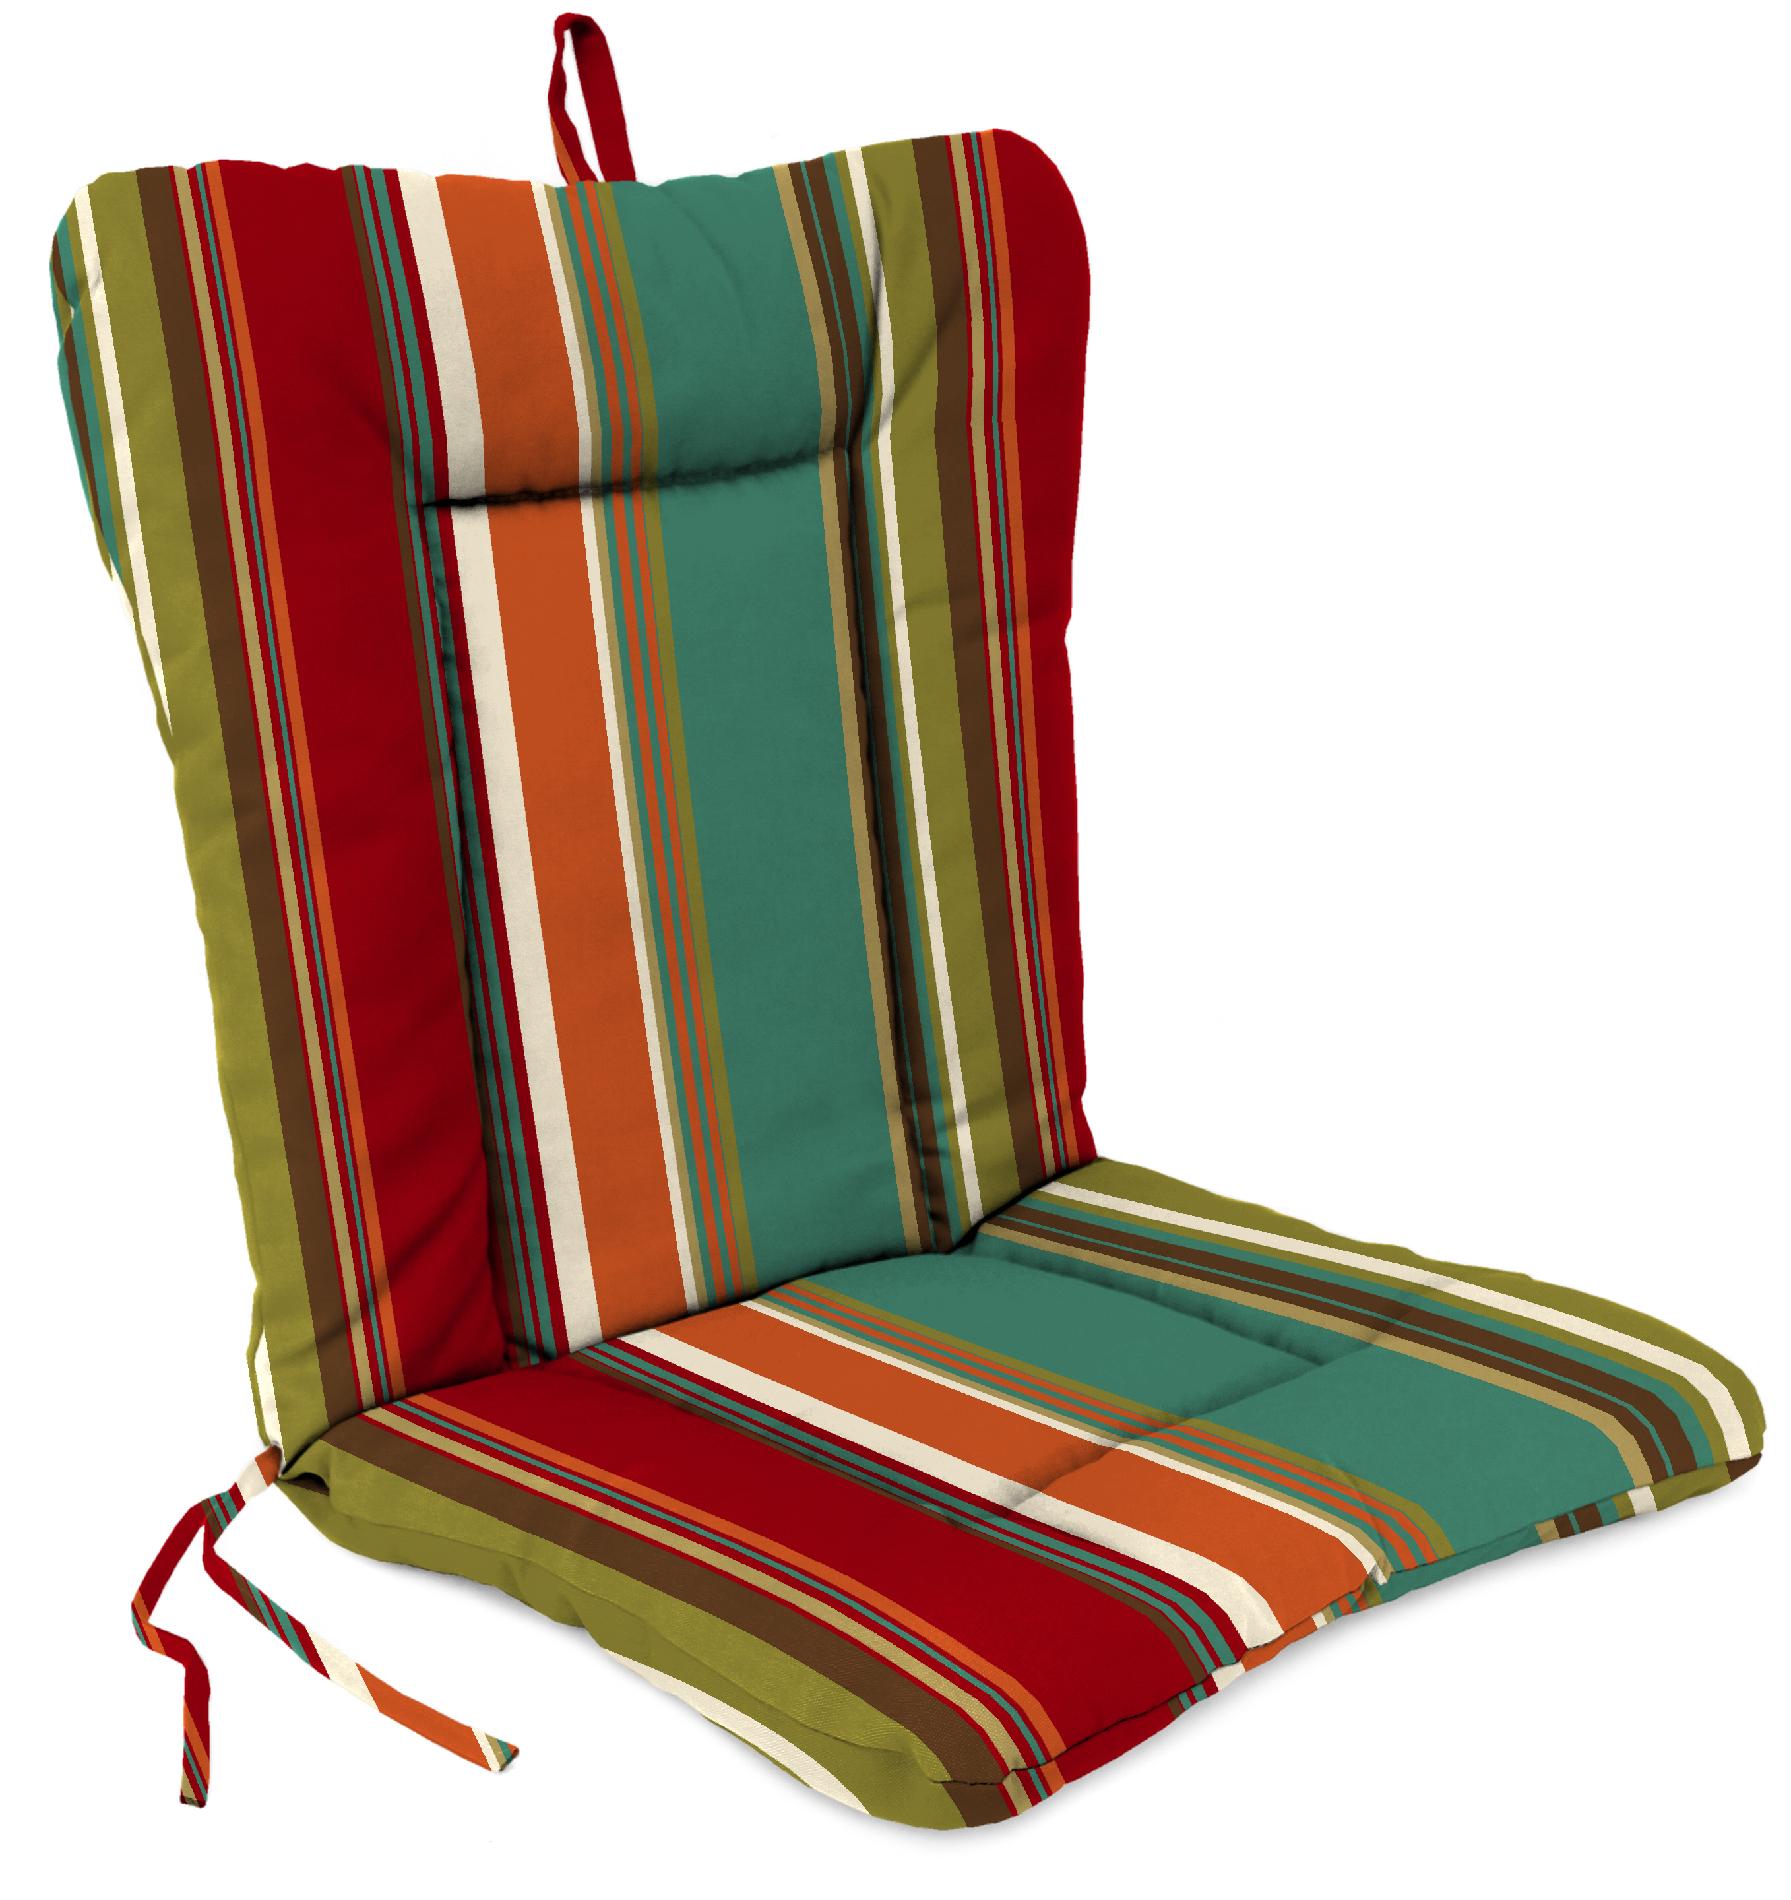 Dinalounge Chair Cushion in Westport Teal